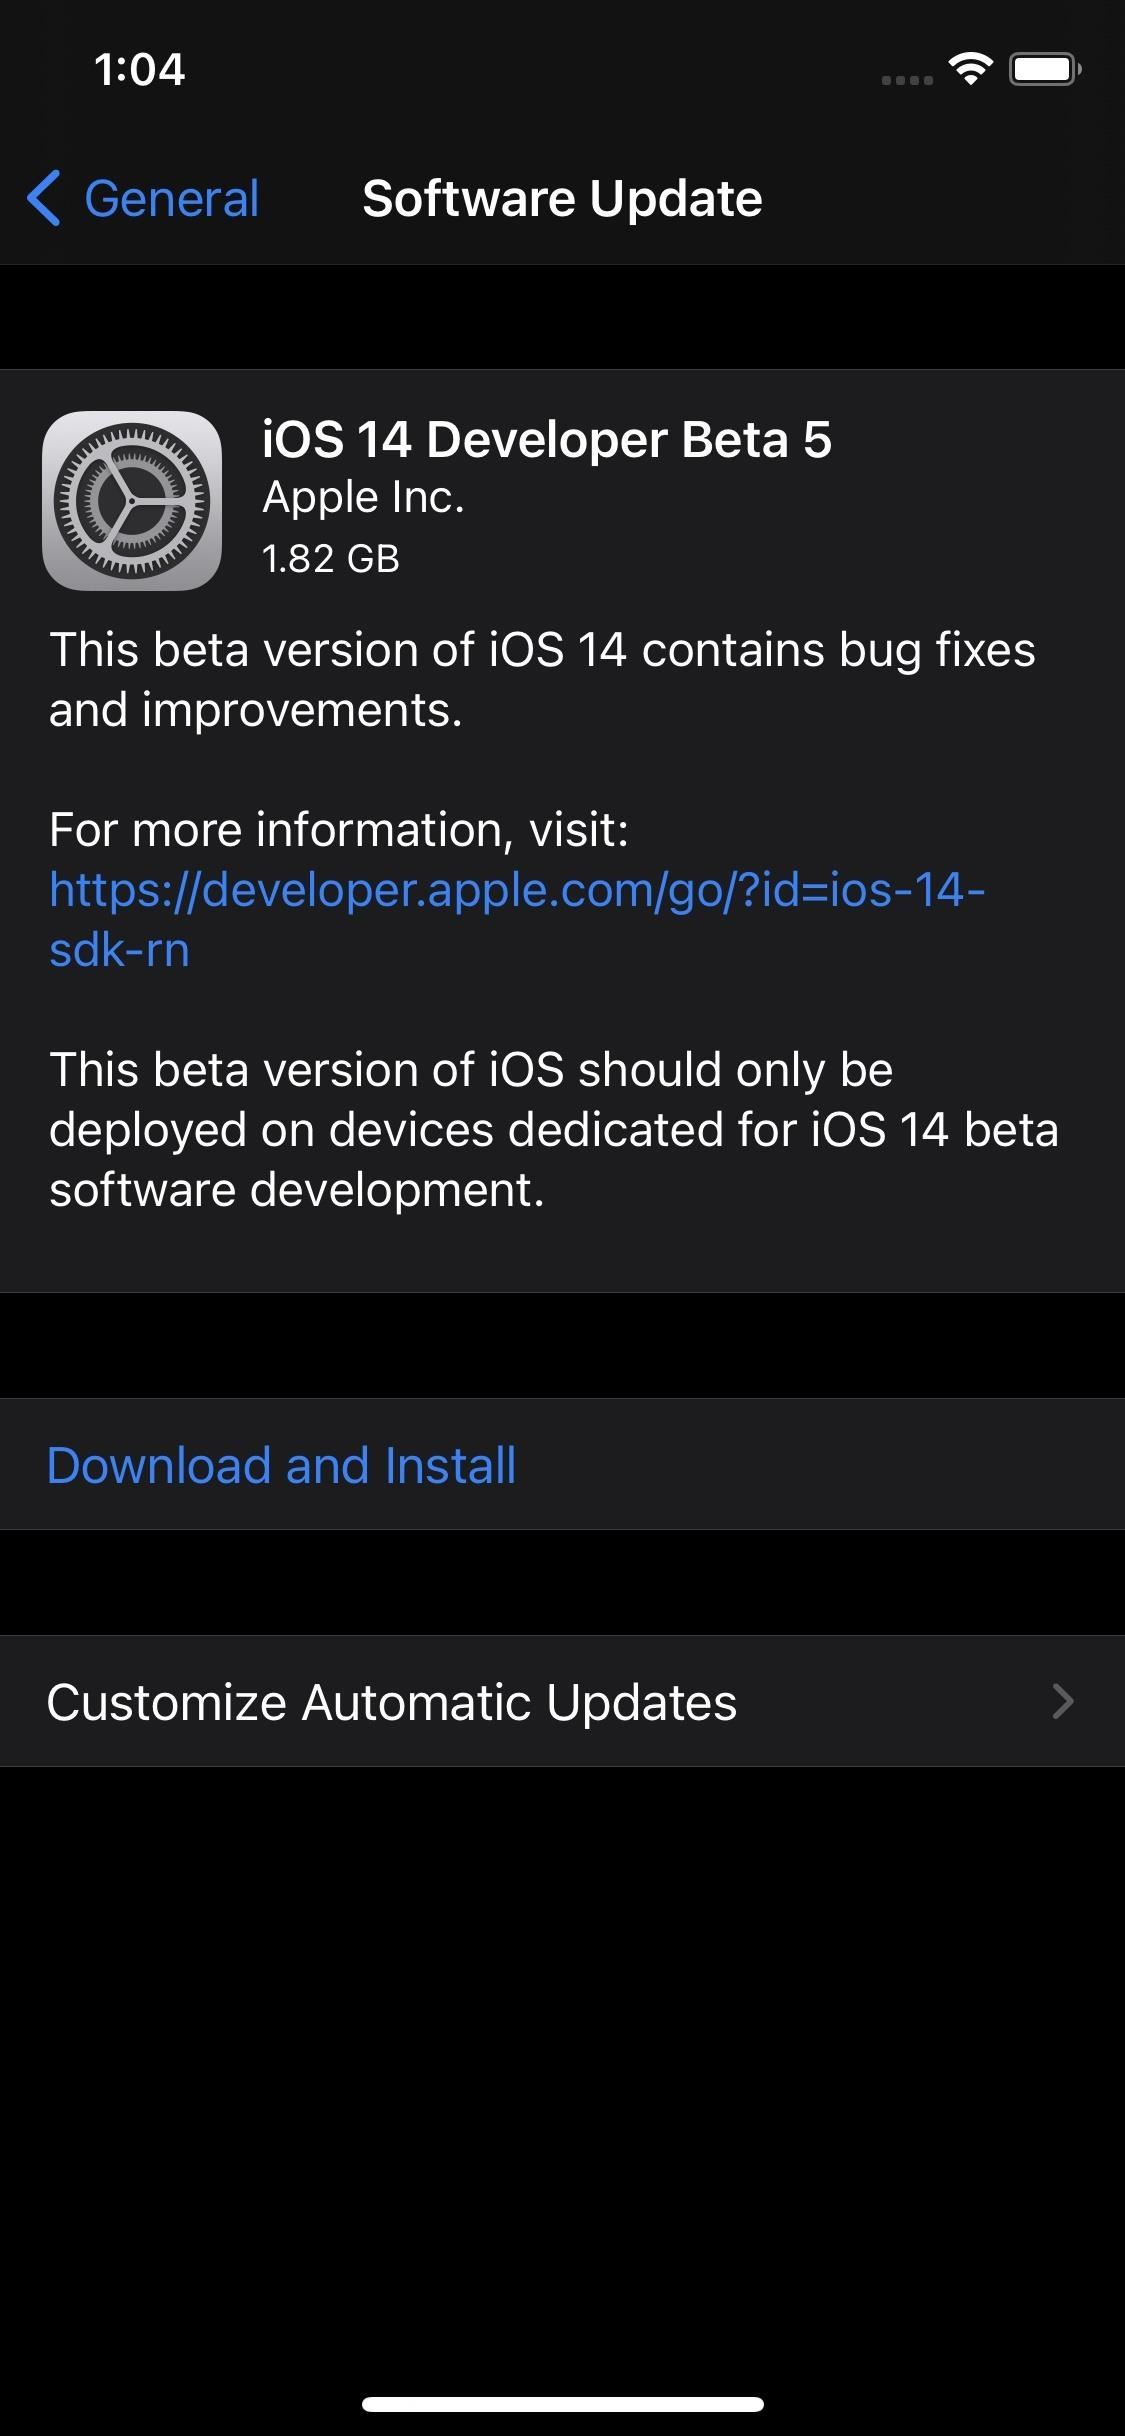 Apple Releases iOS 14 Developer Beta 5 for iPhone